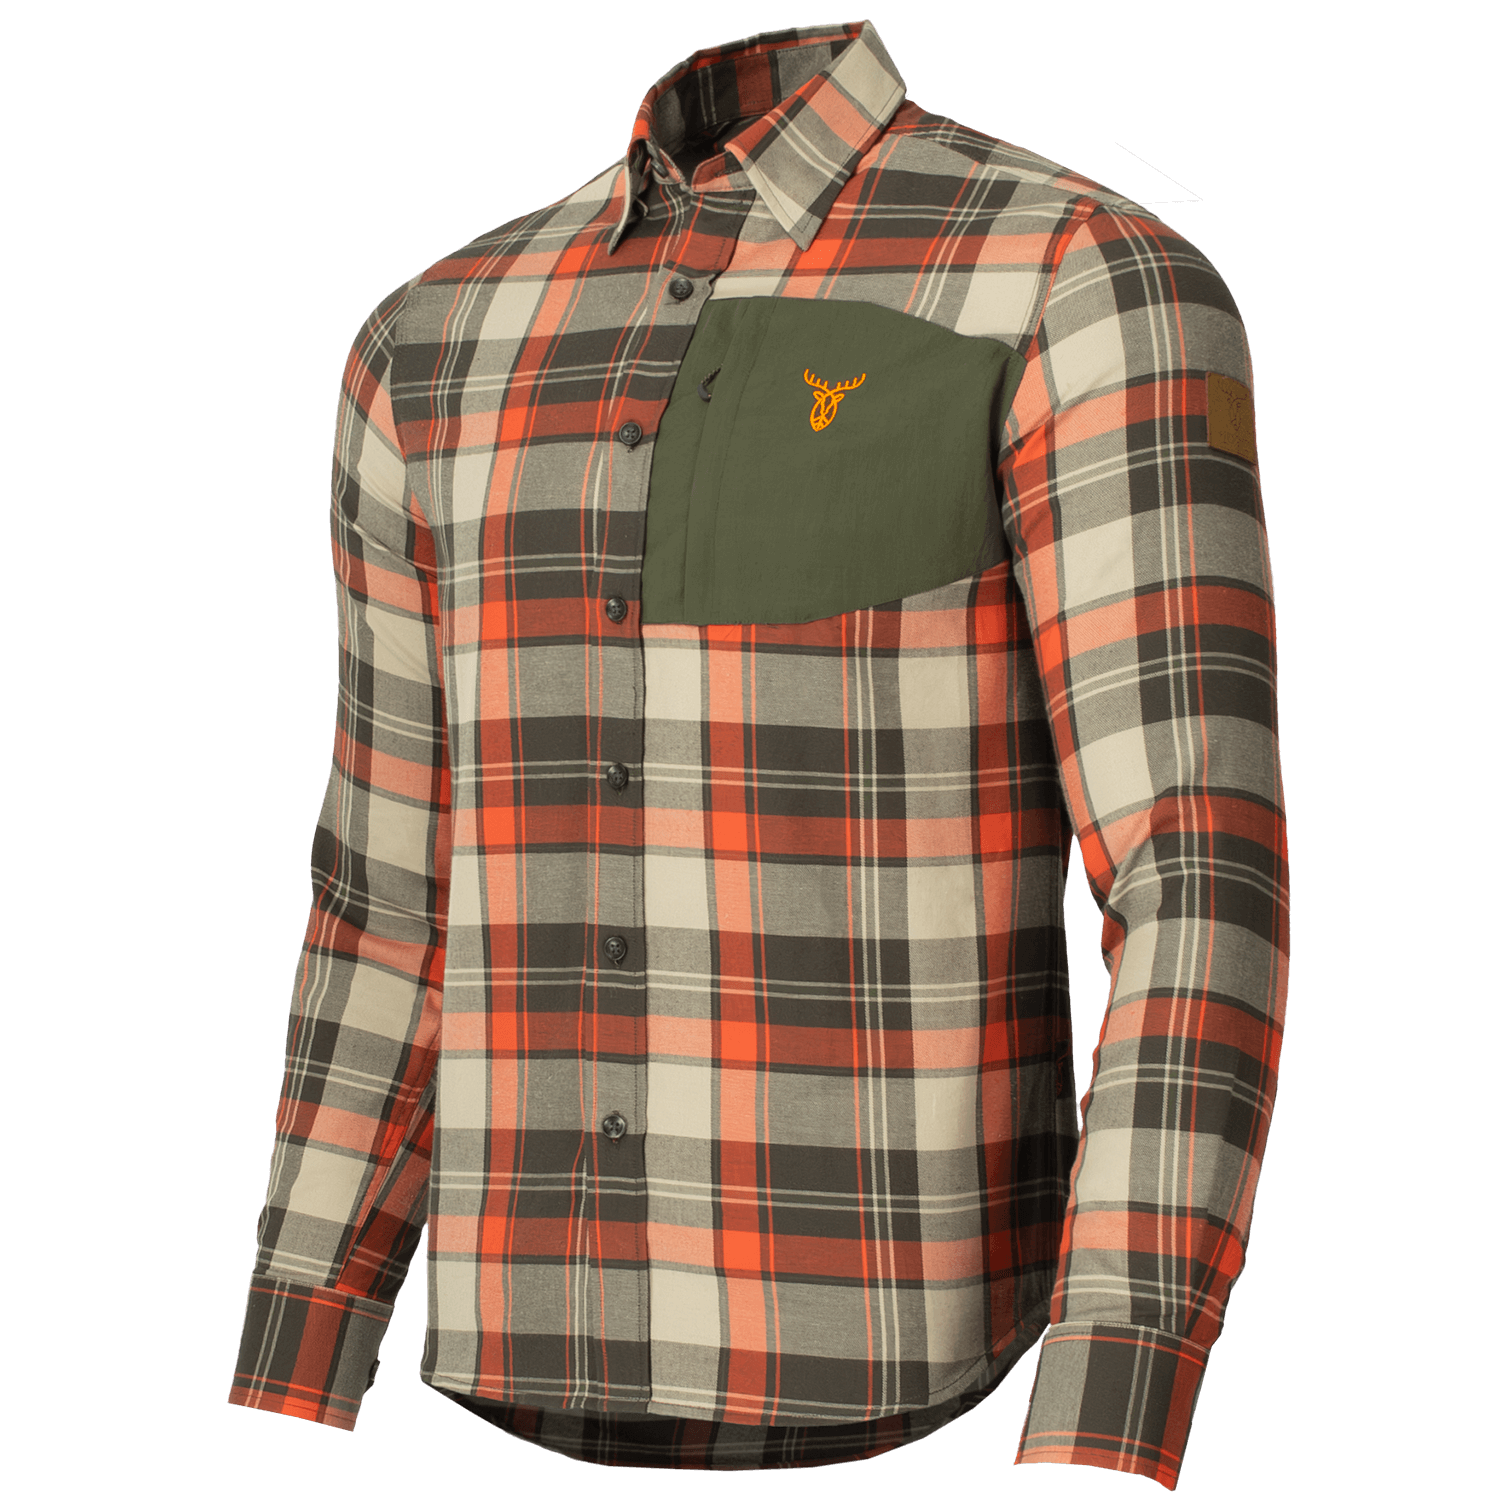 Pirscher Gear Field Shirt (Tangy Orange) - Men's Hunting Clothing